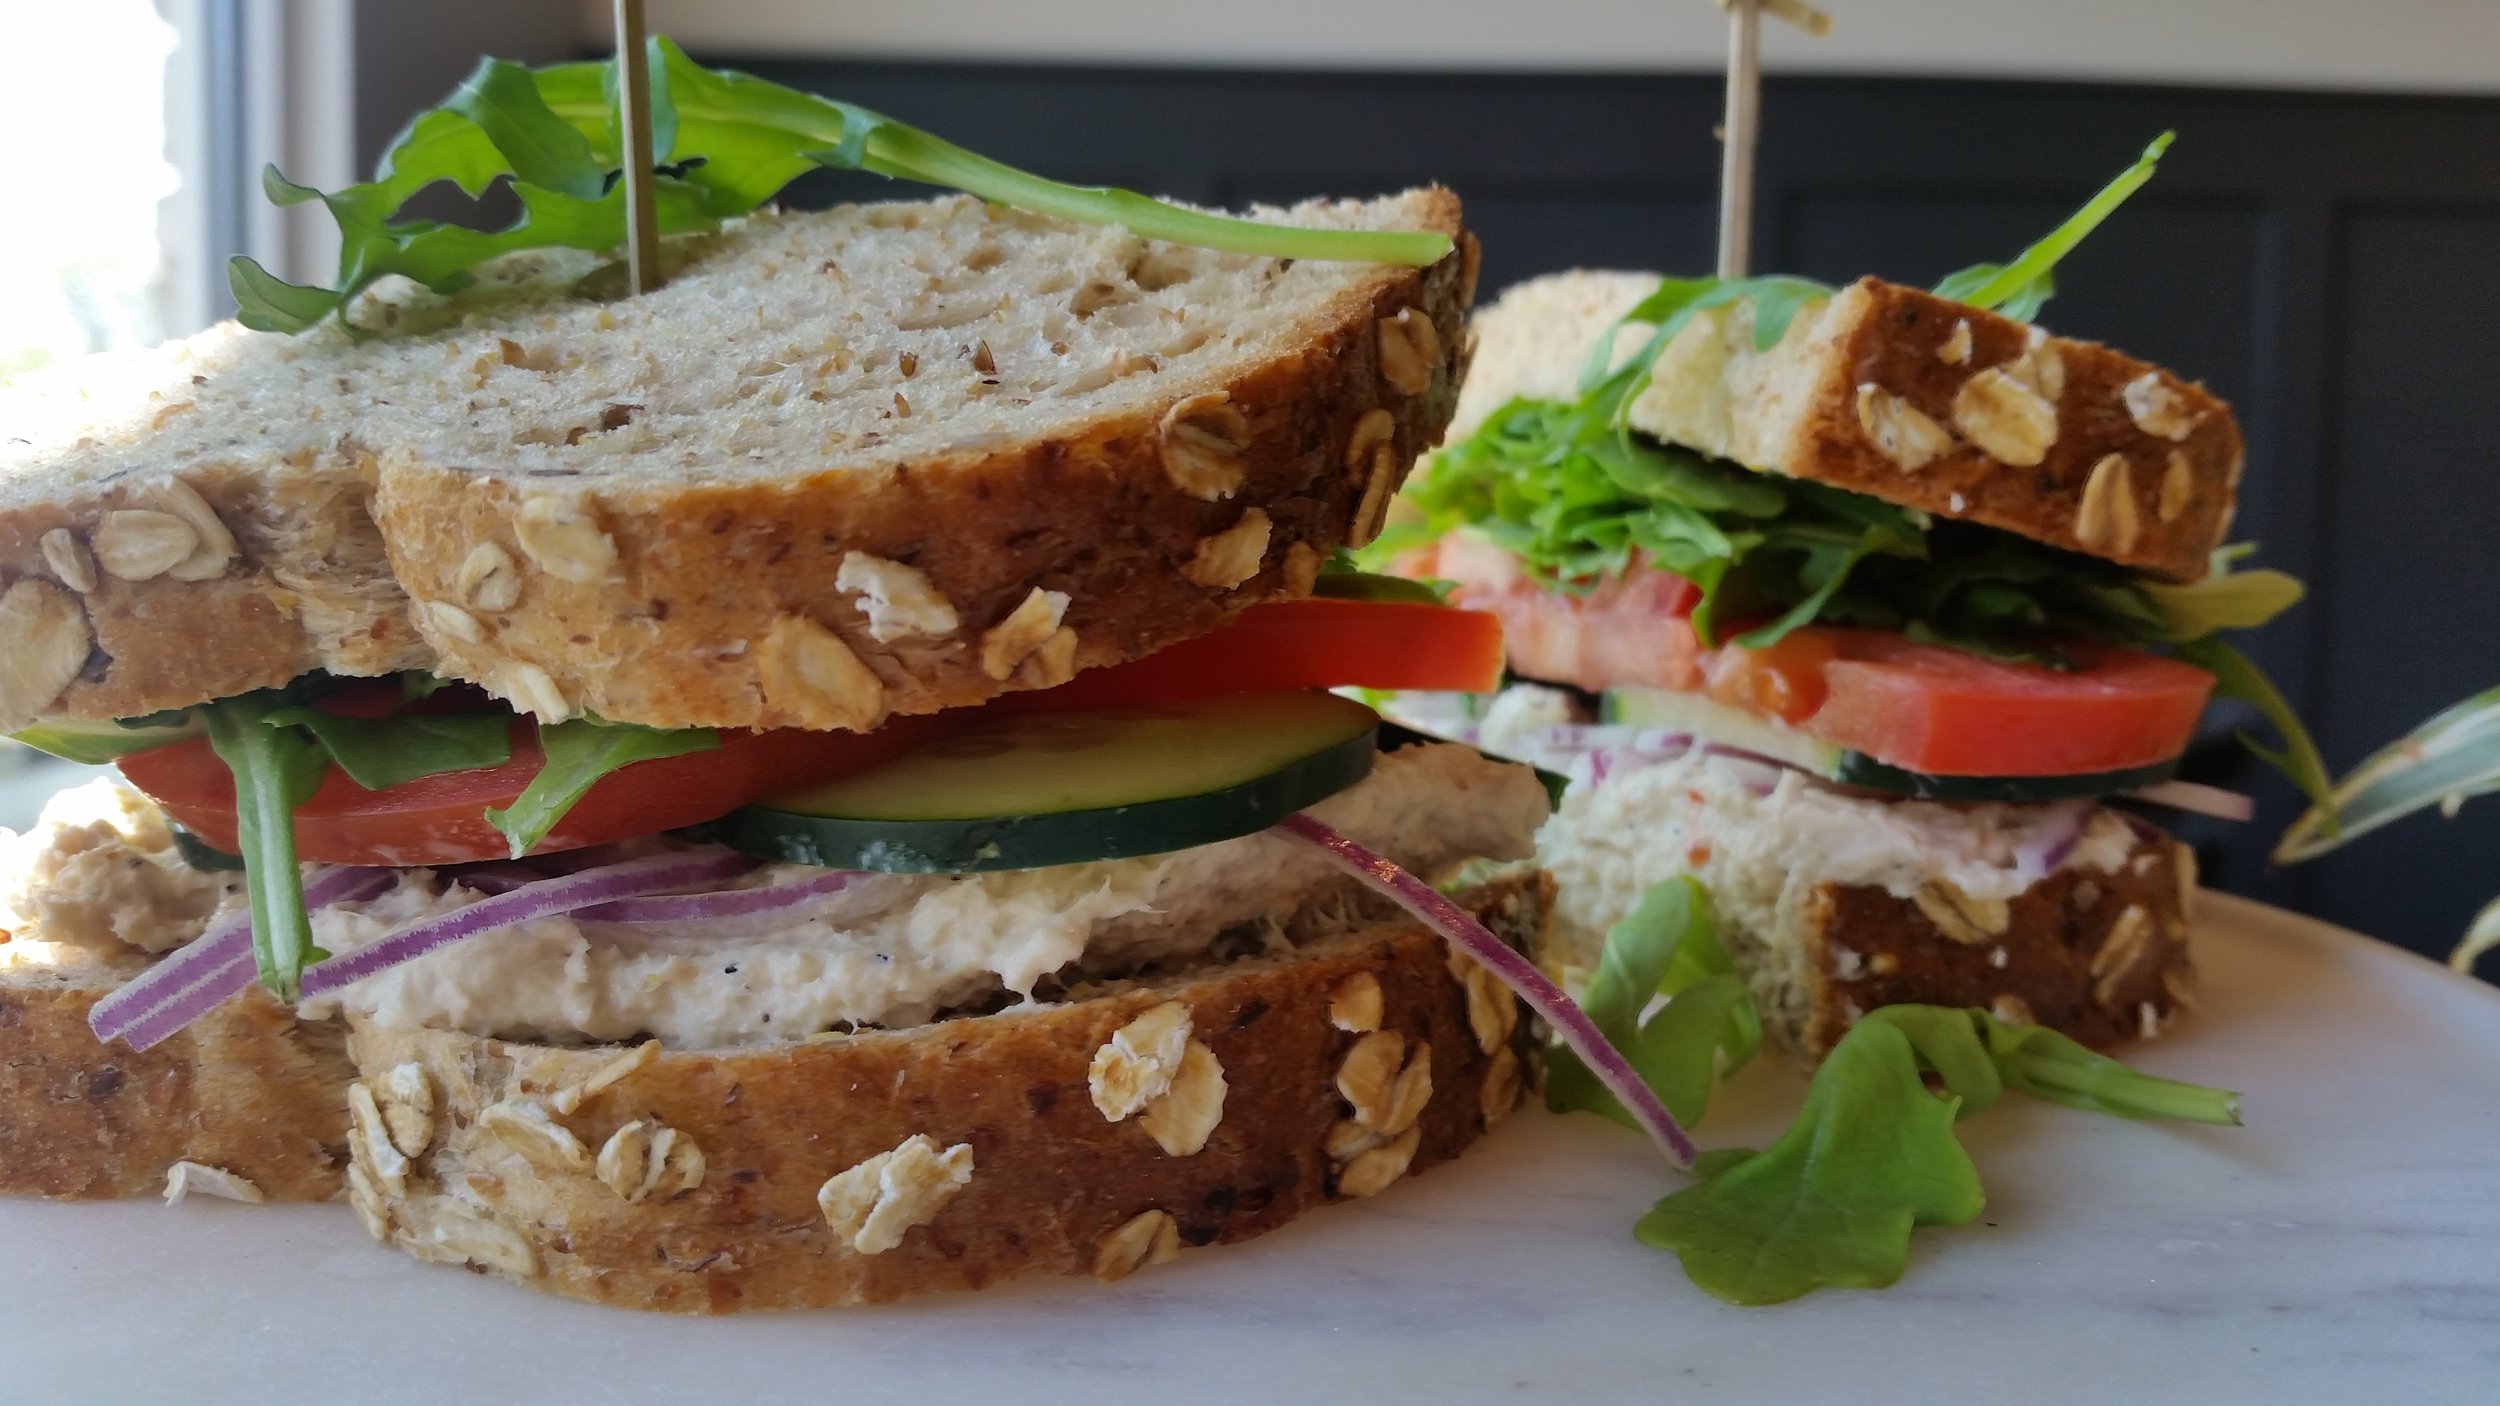  Tuna salad sandwich everyday! 